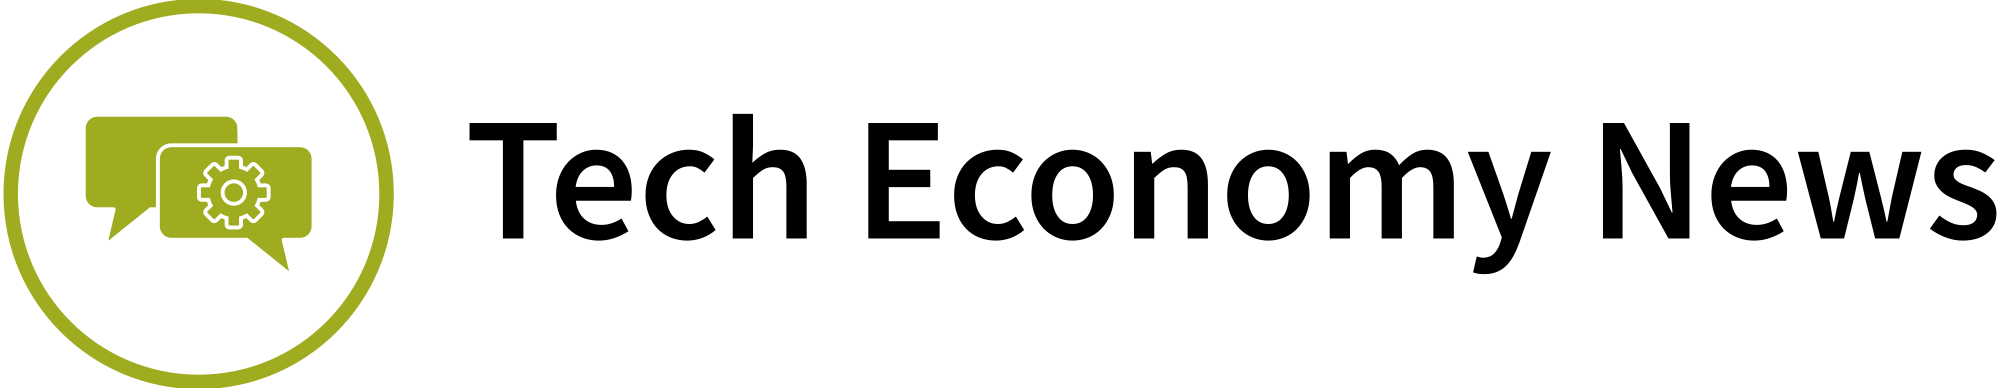 Tech Economy News